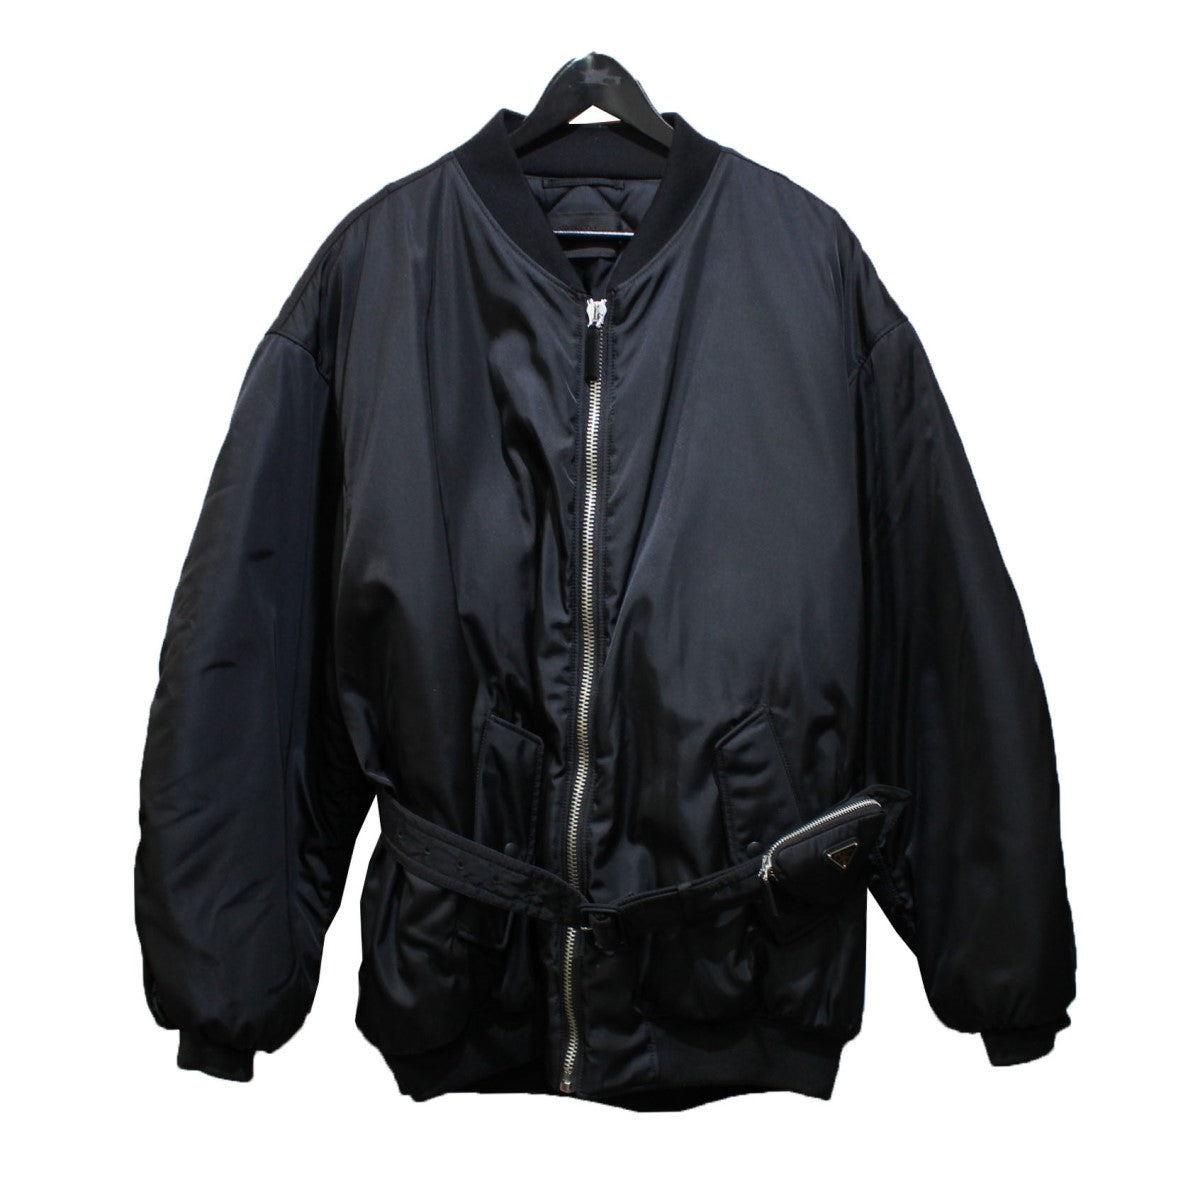 PRADA(プラダ) 22AW Re-Nylon bomber jacket リナイロン ボンバー 